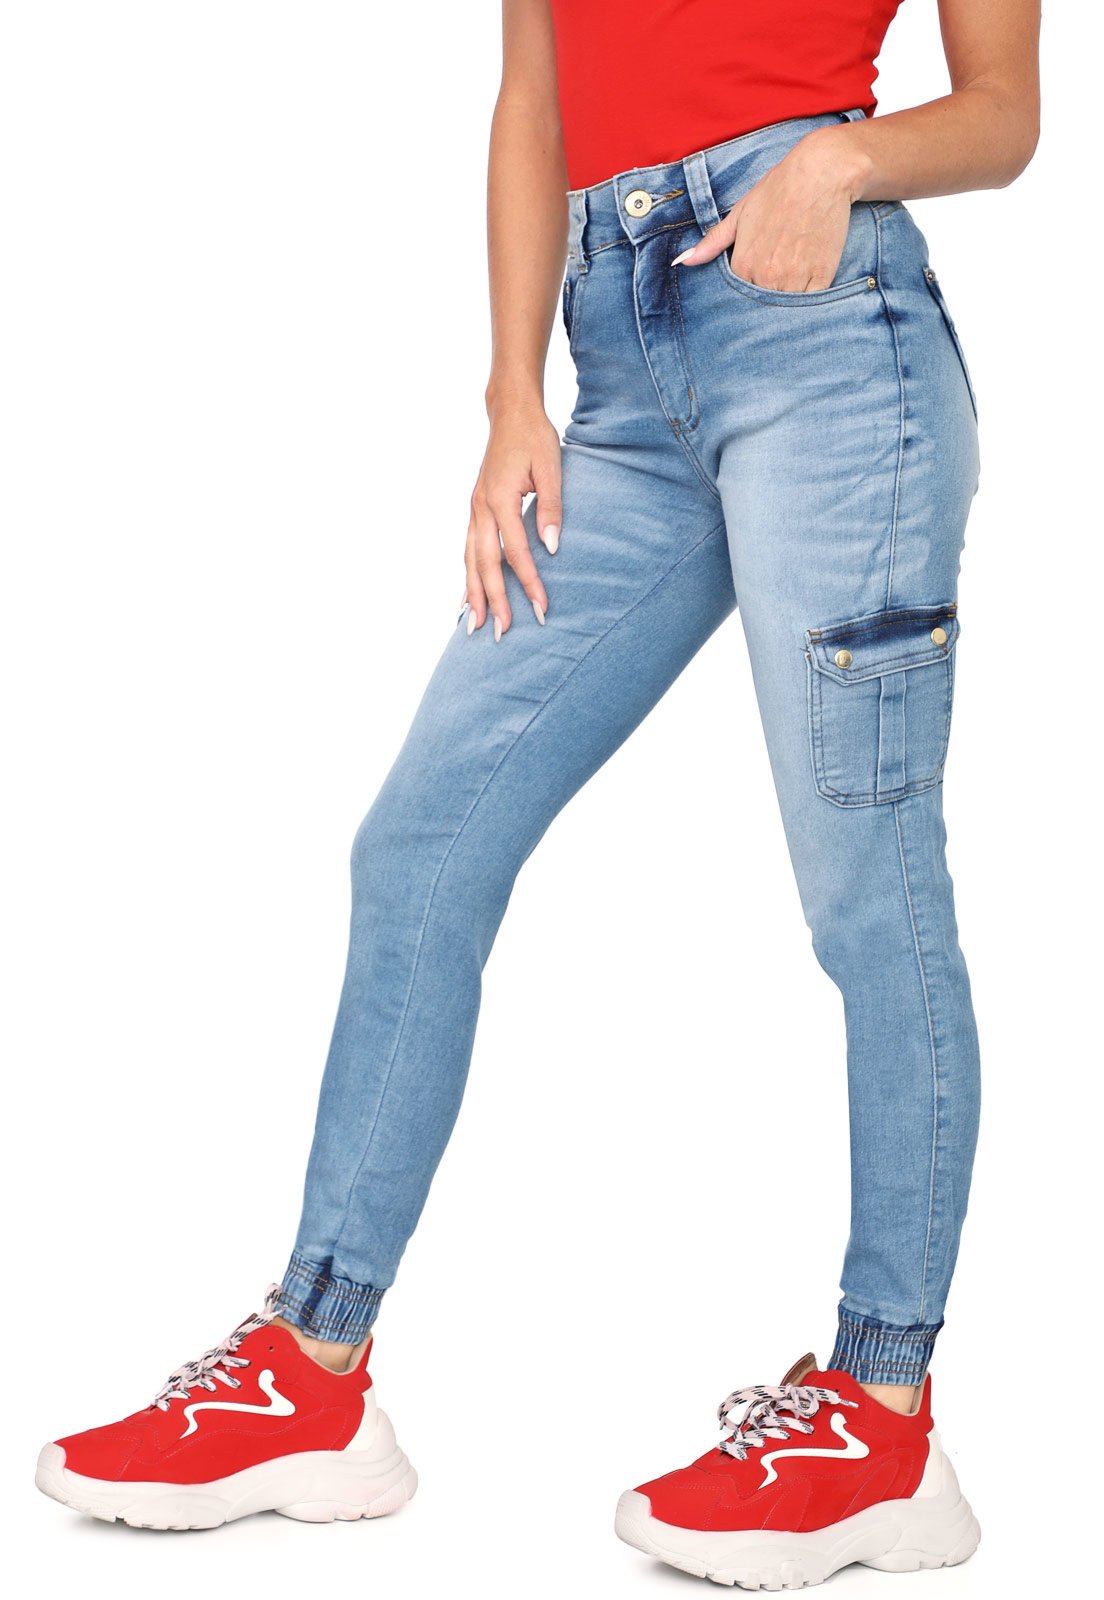 biotipo jeans dafiti